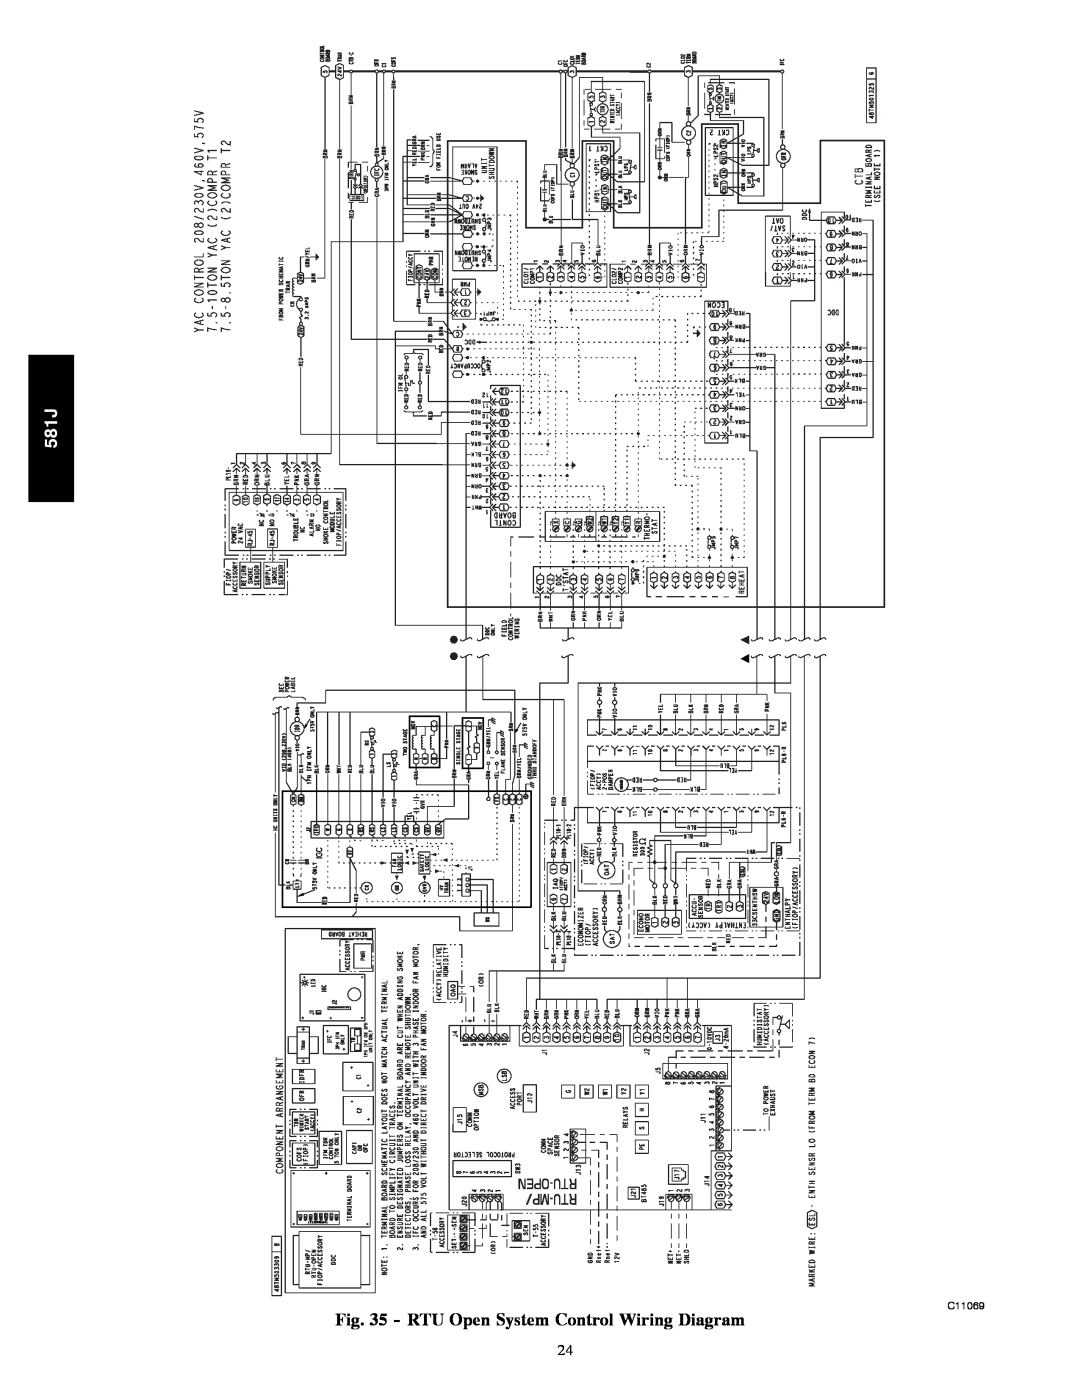 Bryant 581J installation instructions RTU Open System Control Wiring Diagram, C11069 